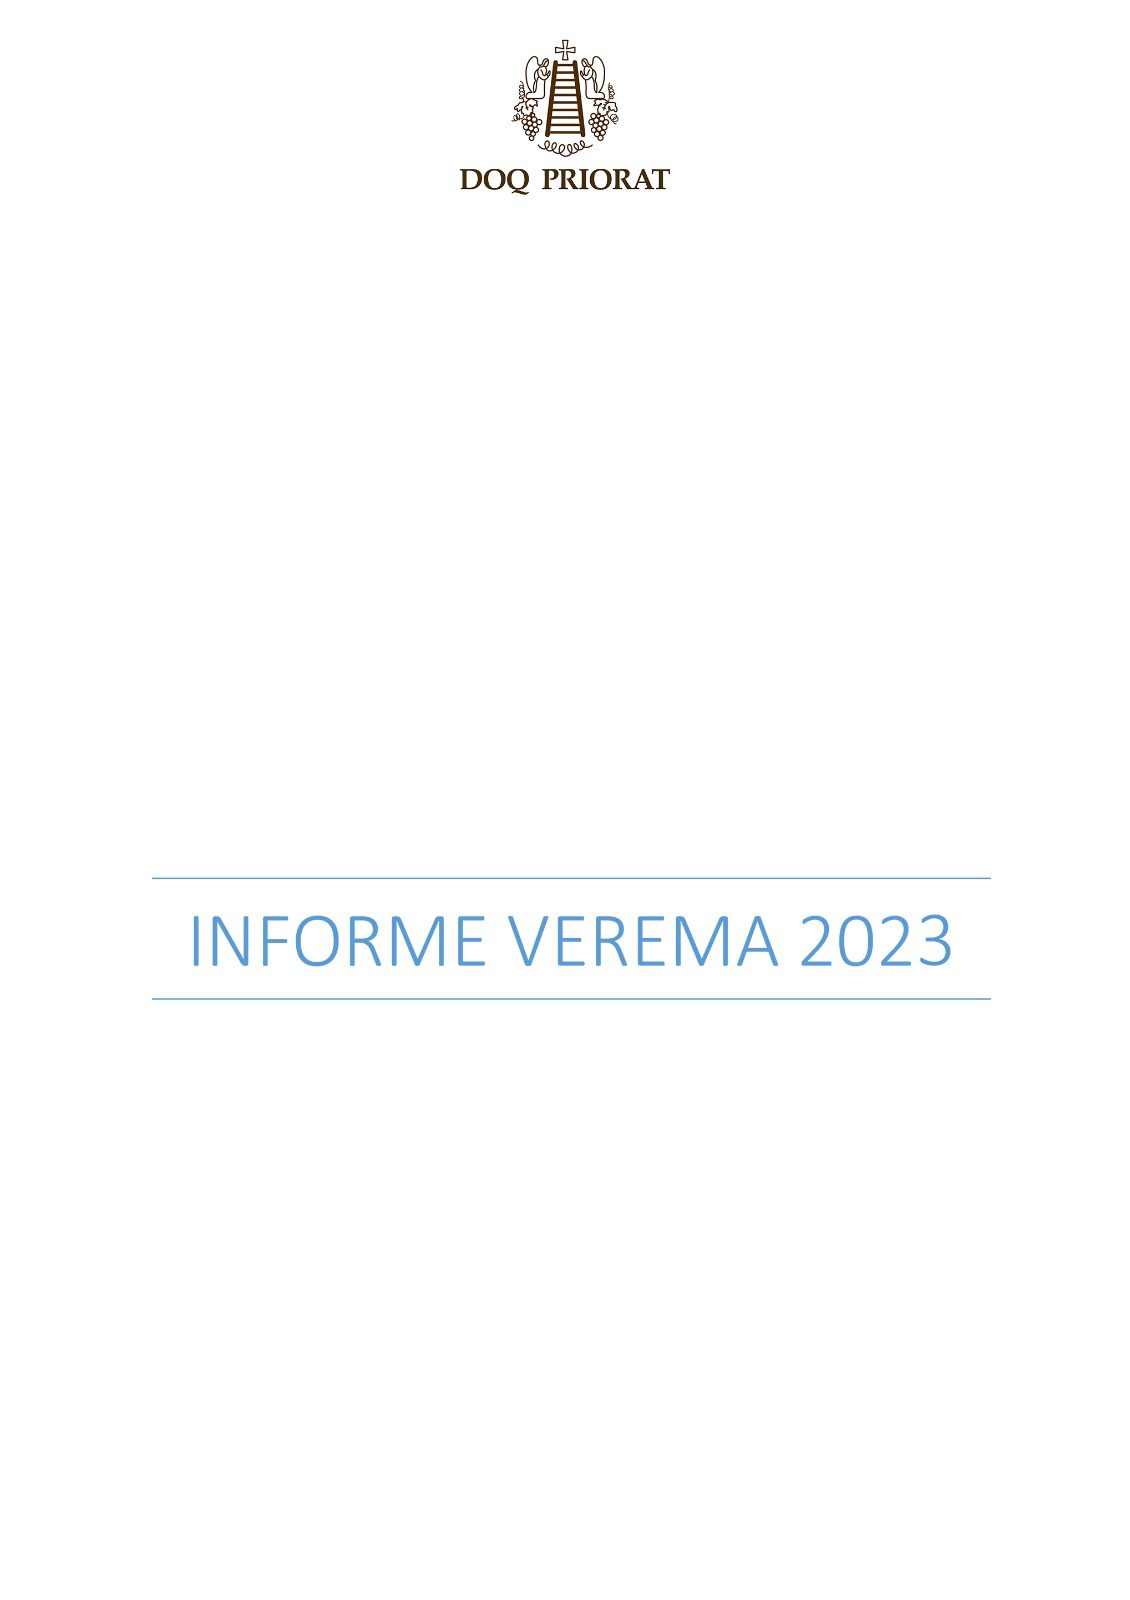 Informe de verema 2023